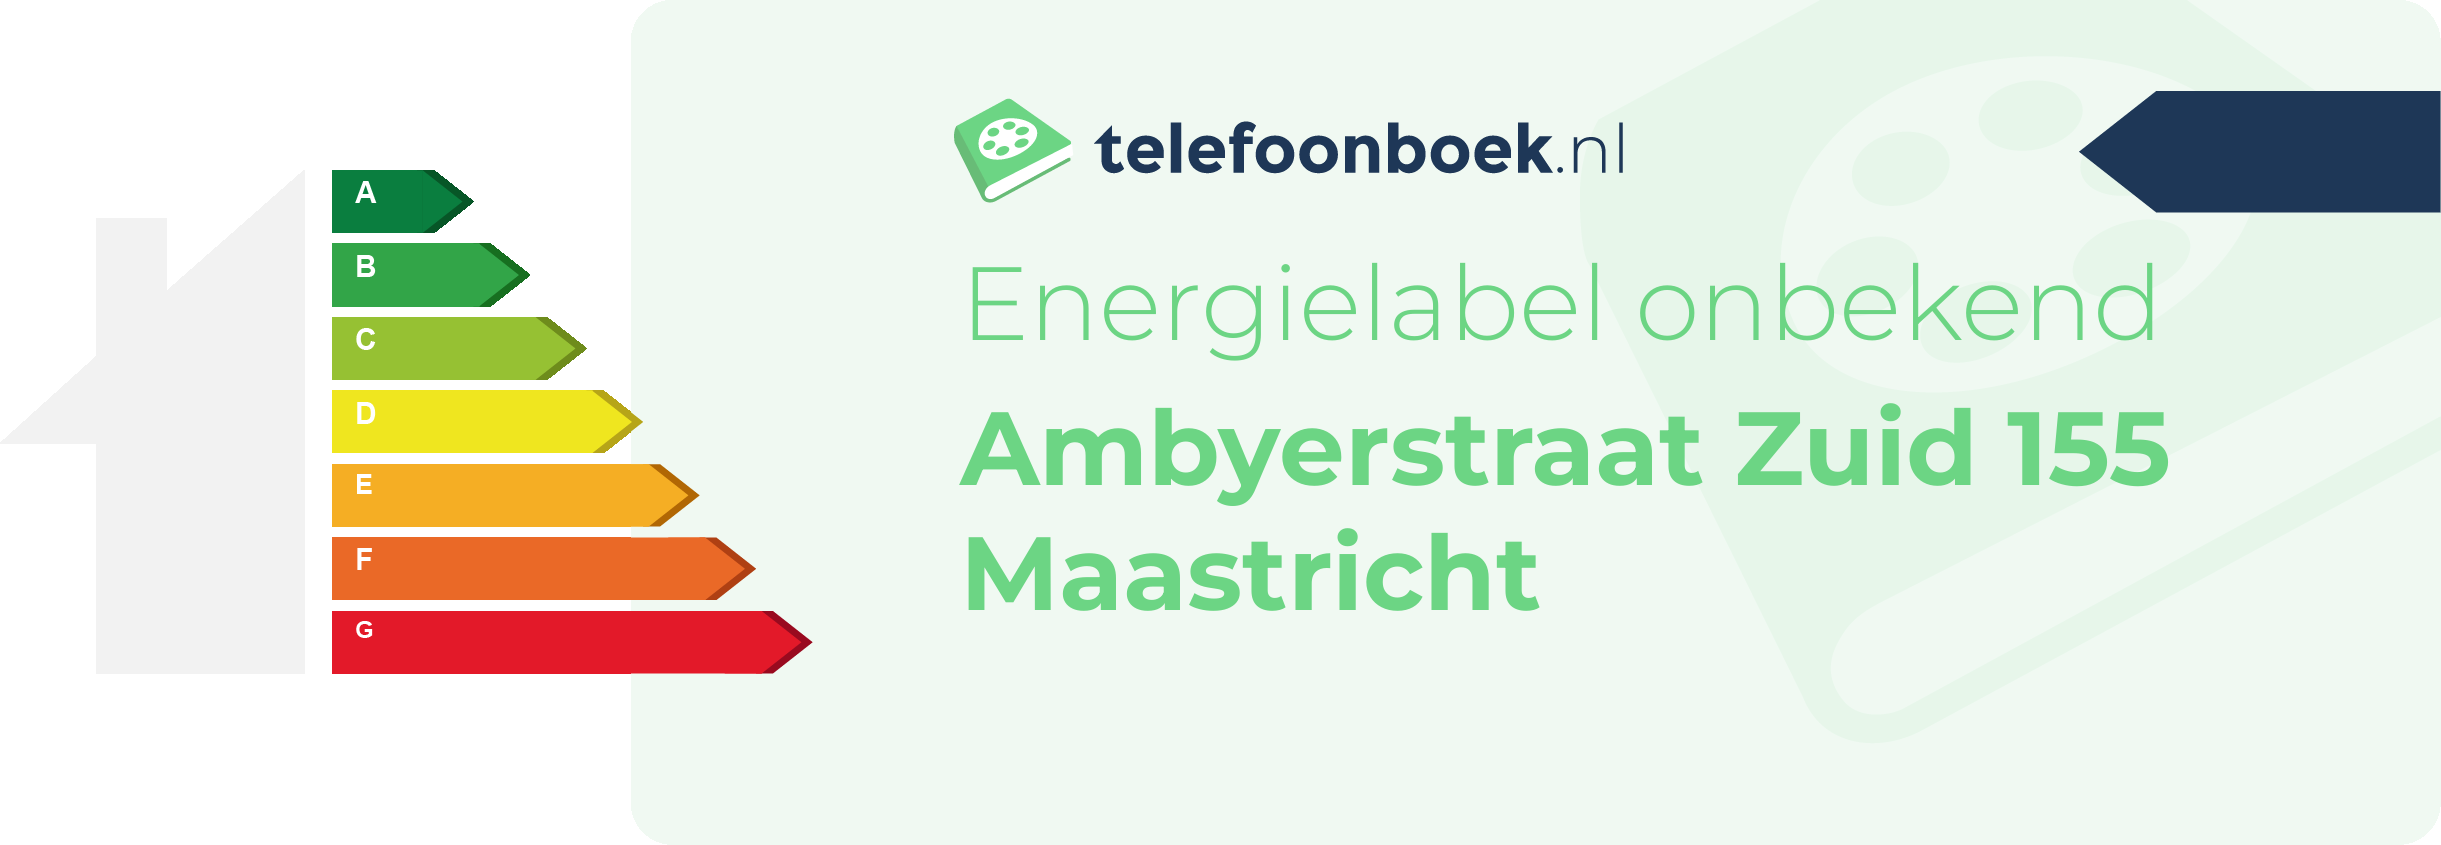 Energielabel Ambyerstraat Zuid 155 Maastricht